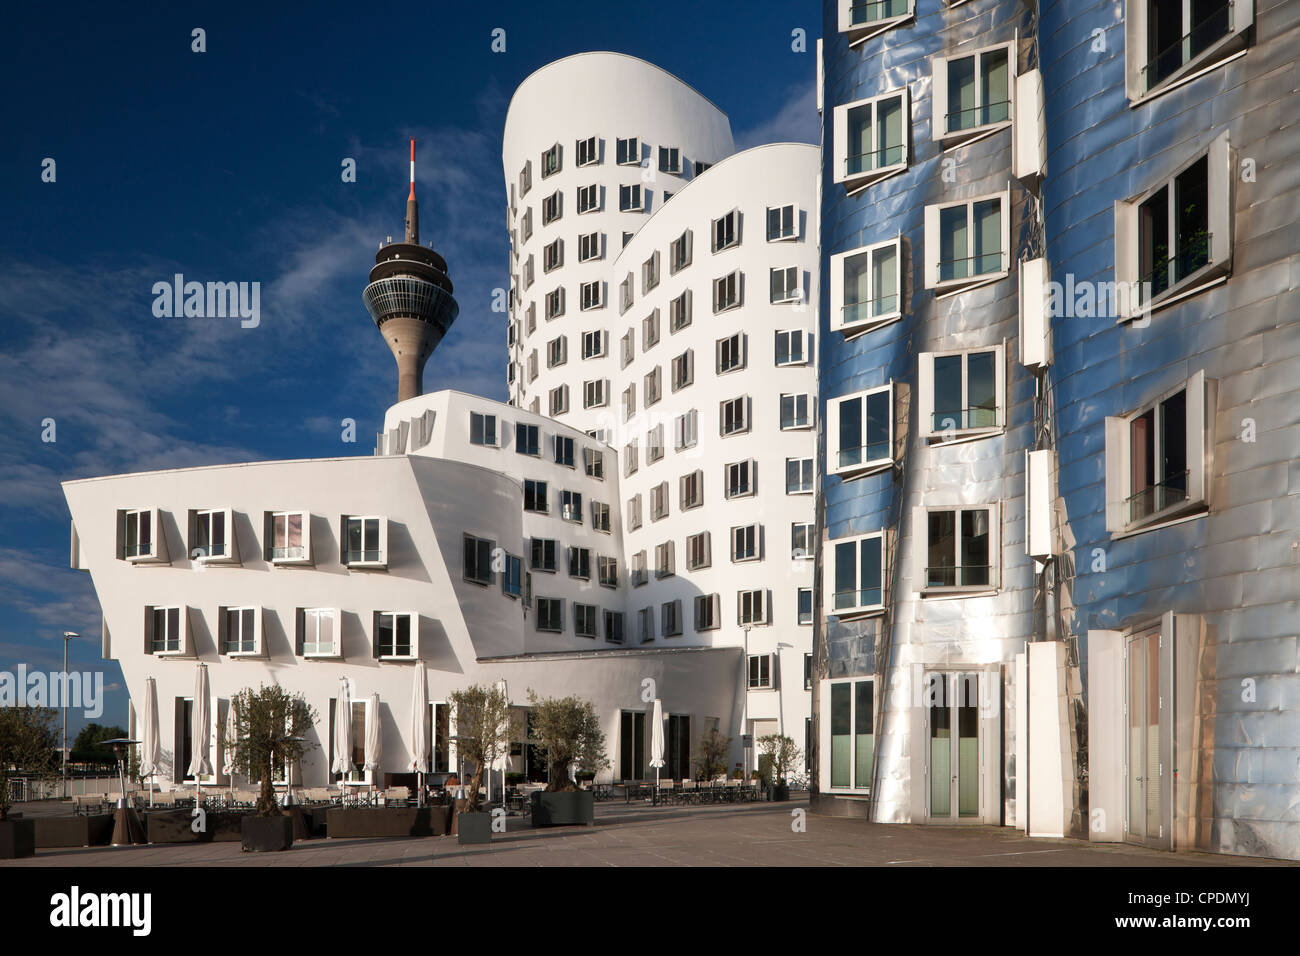 Neuer Zollhof office buildings with Rheinturm in background, Medienhafen, Dusseldorf, Germany, Europe Stock Photo